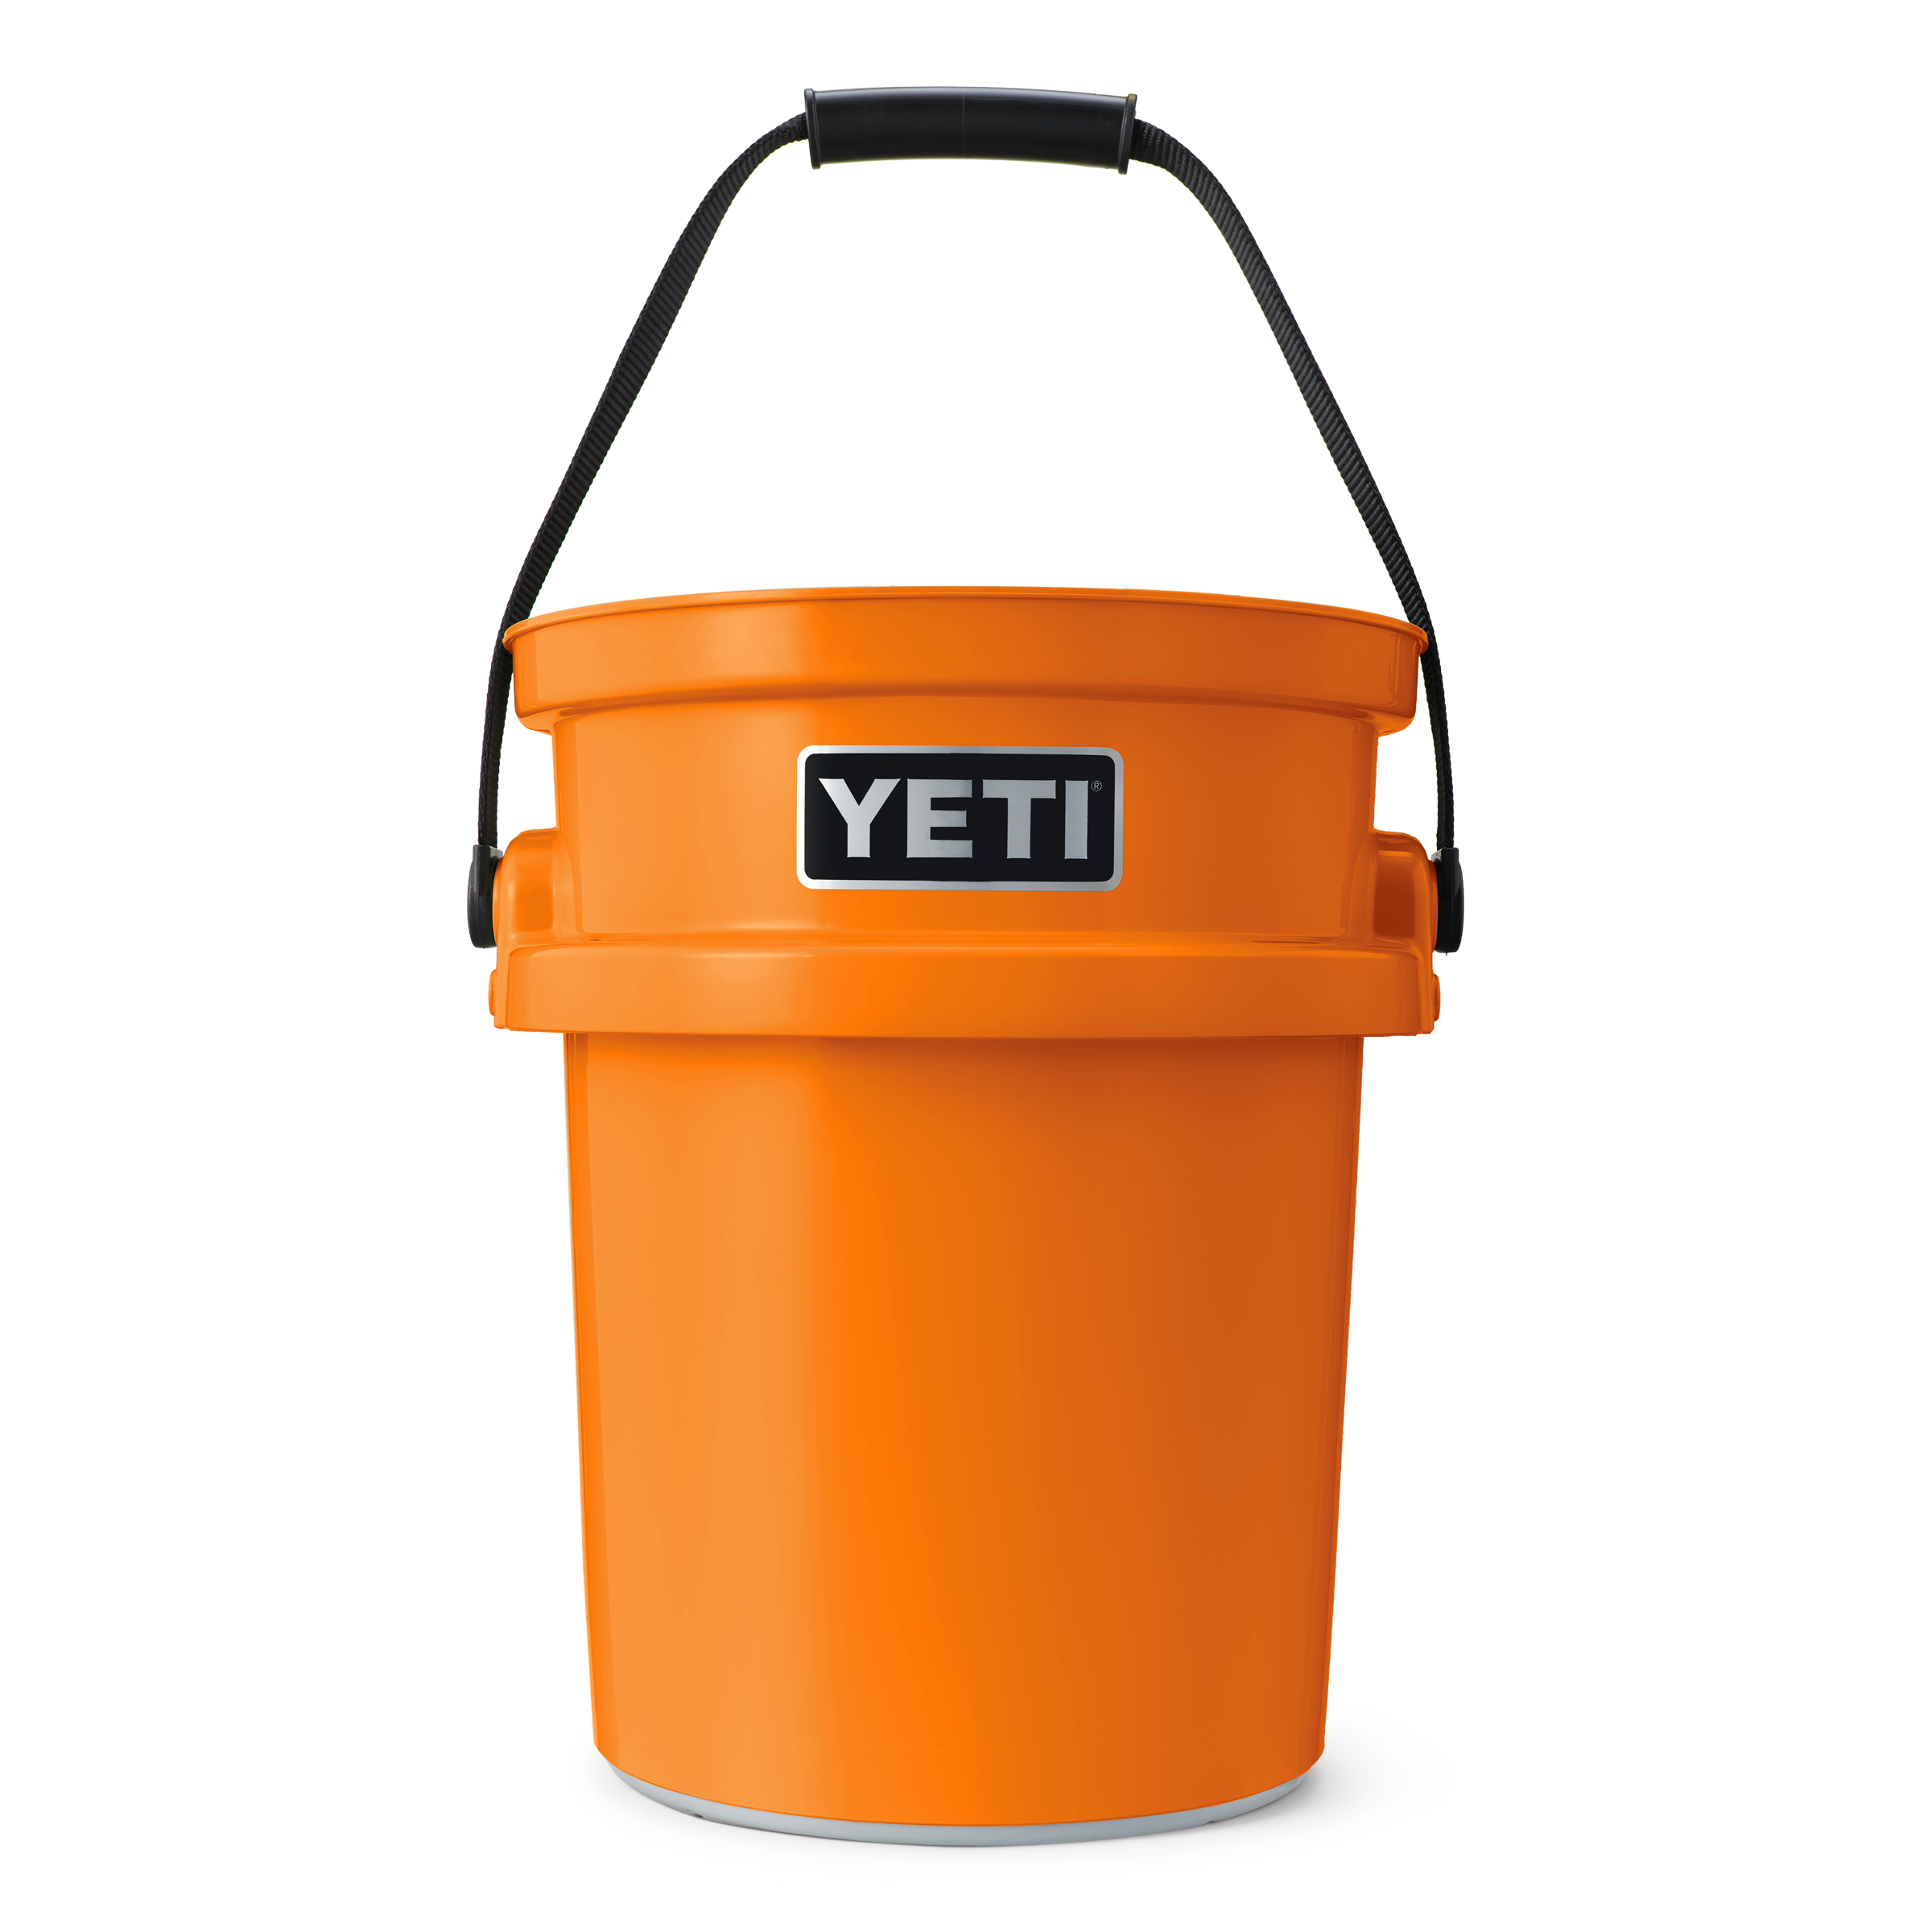 YETI Loadout 5-Gallon Bucket, Impact Resistant Fishing/Utility Bucket,  Nordic Blue